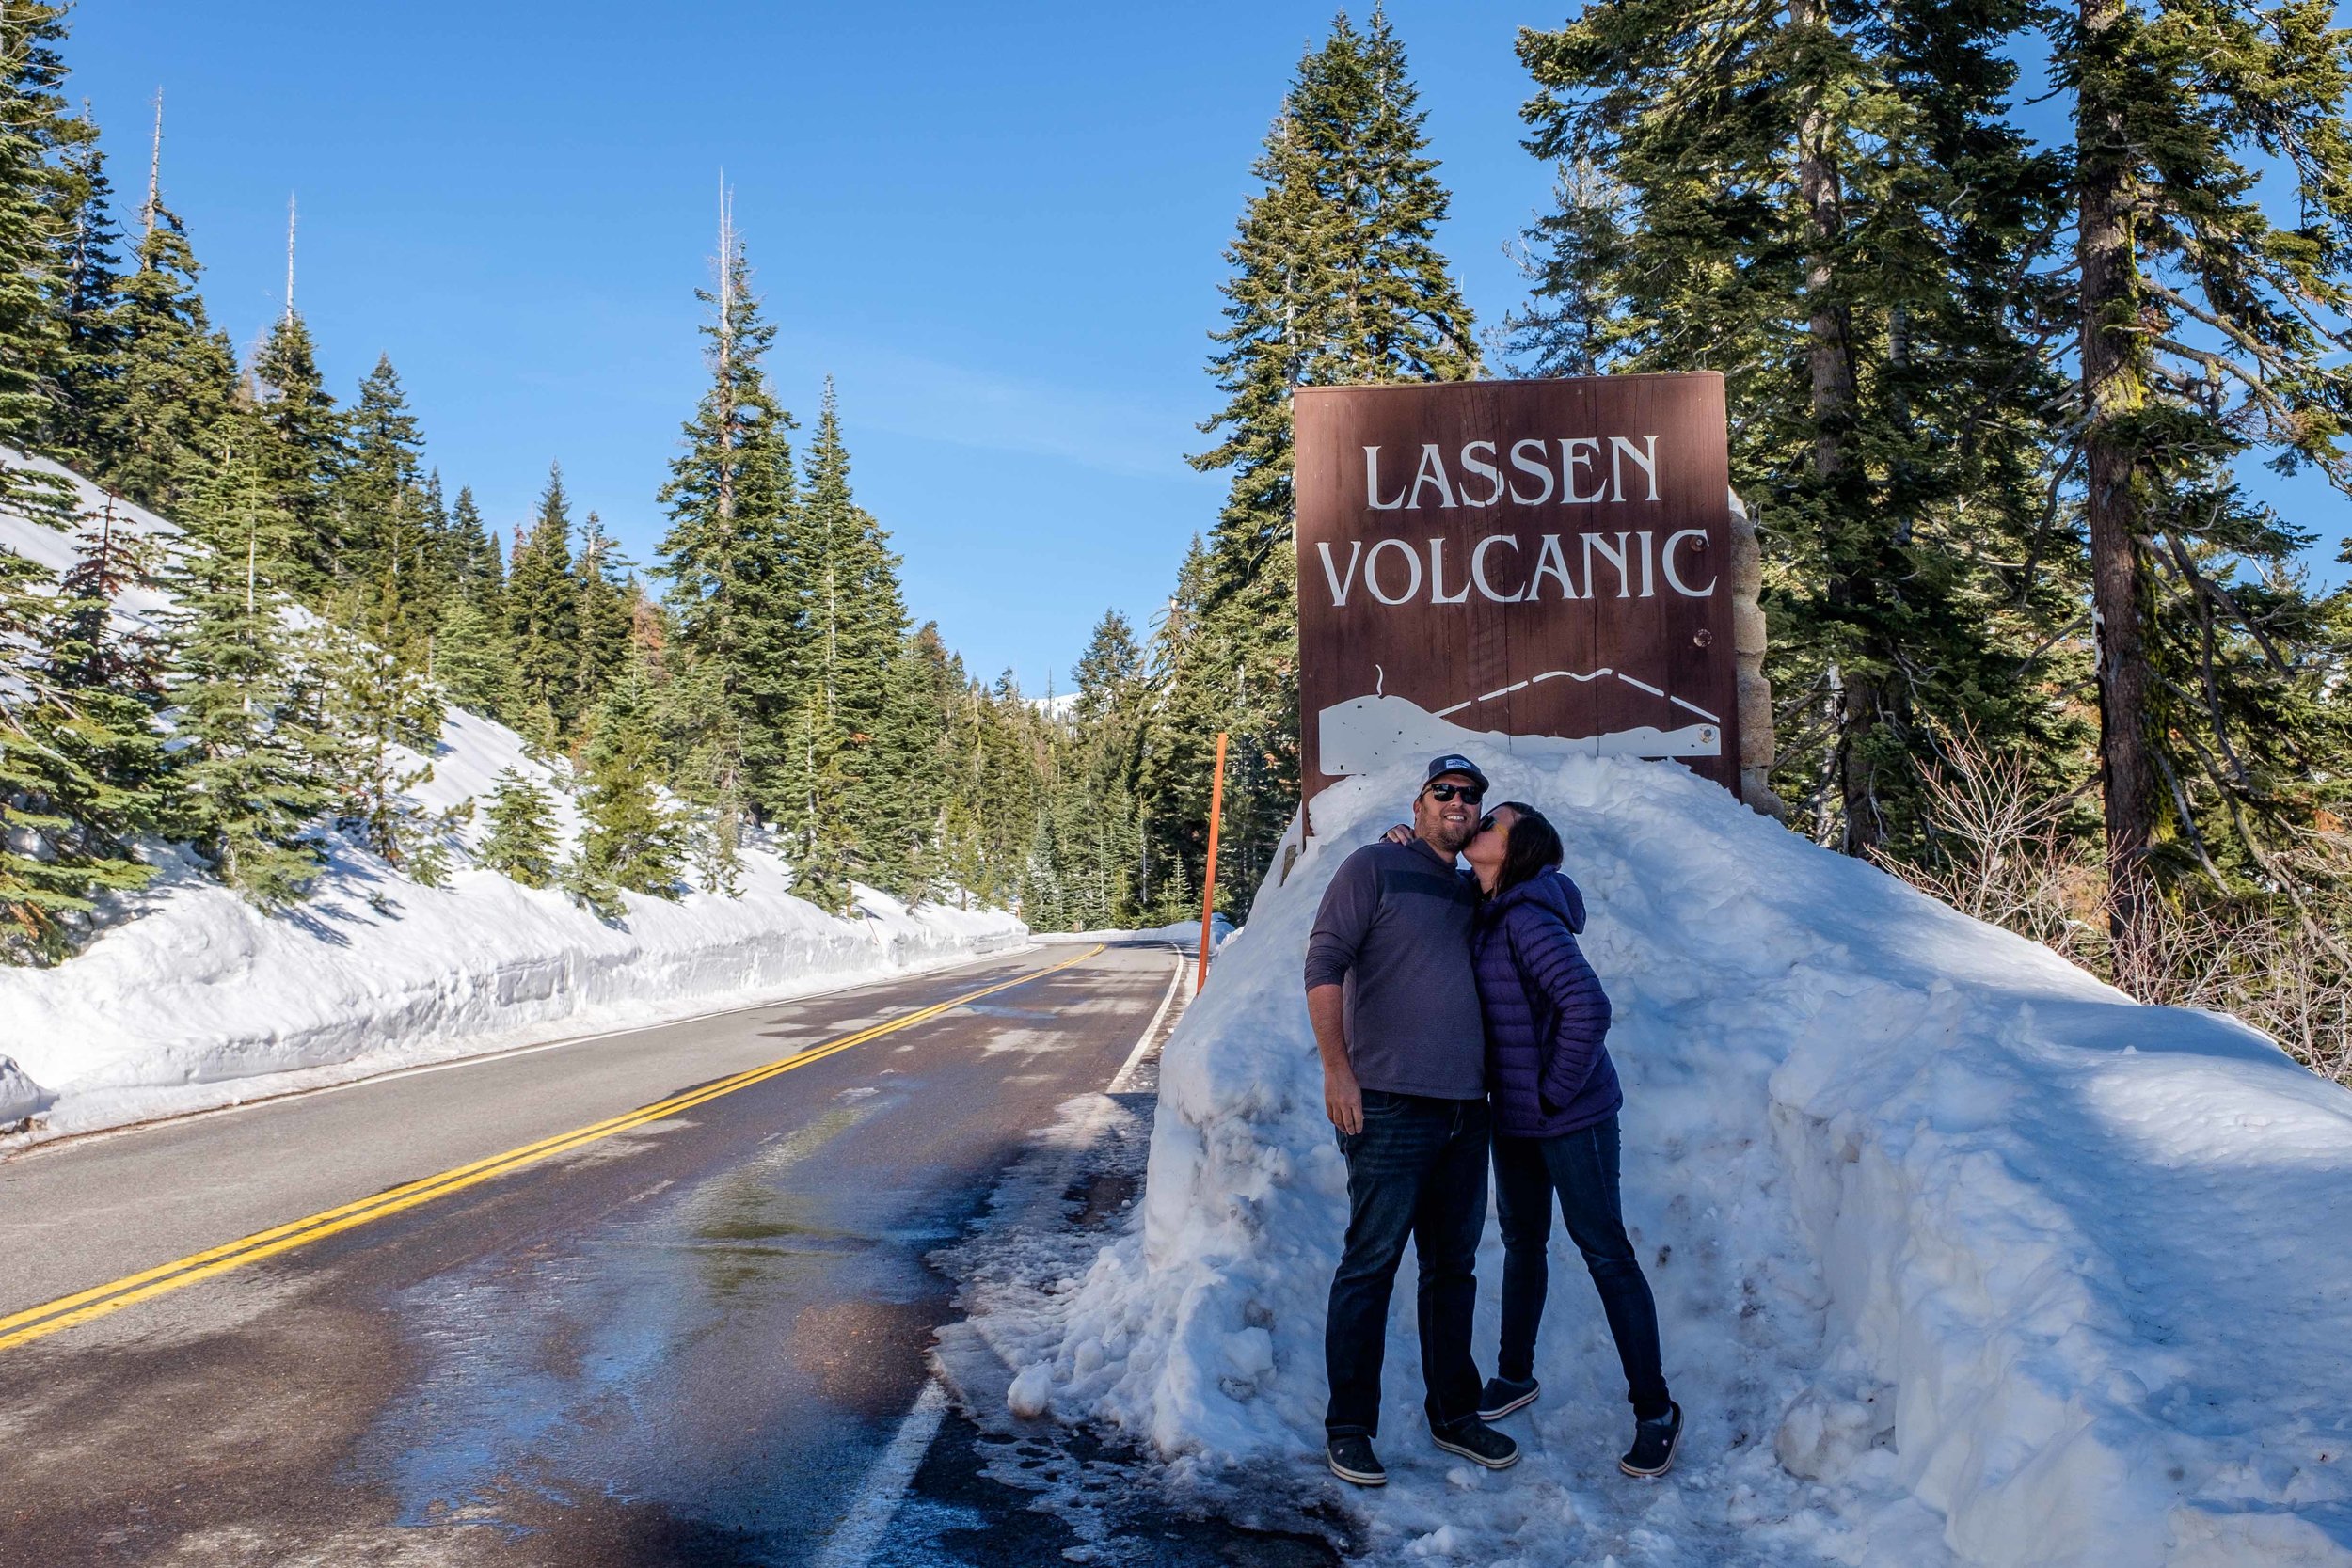 Lassen Volcanic National Park in California - Tours and Activities